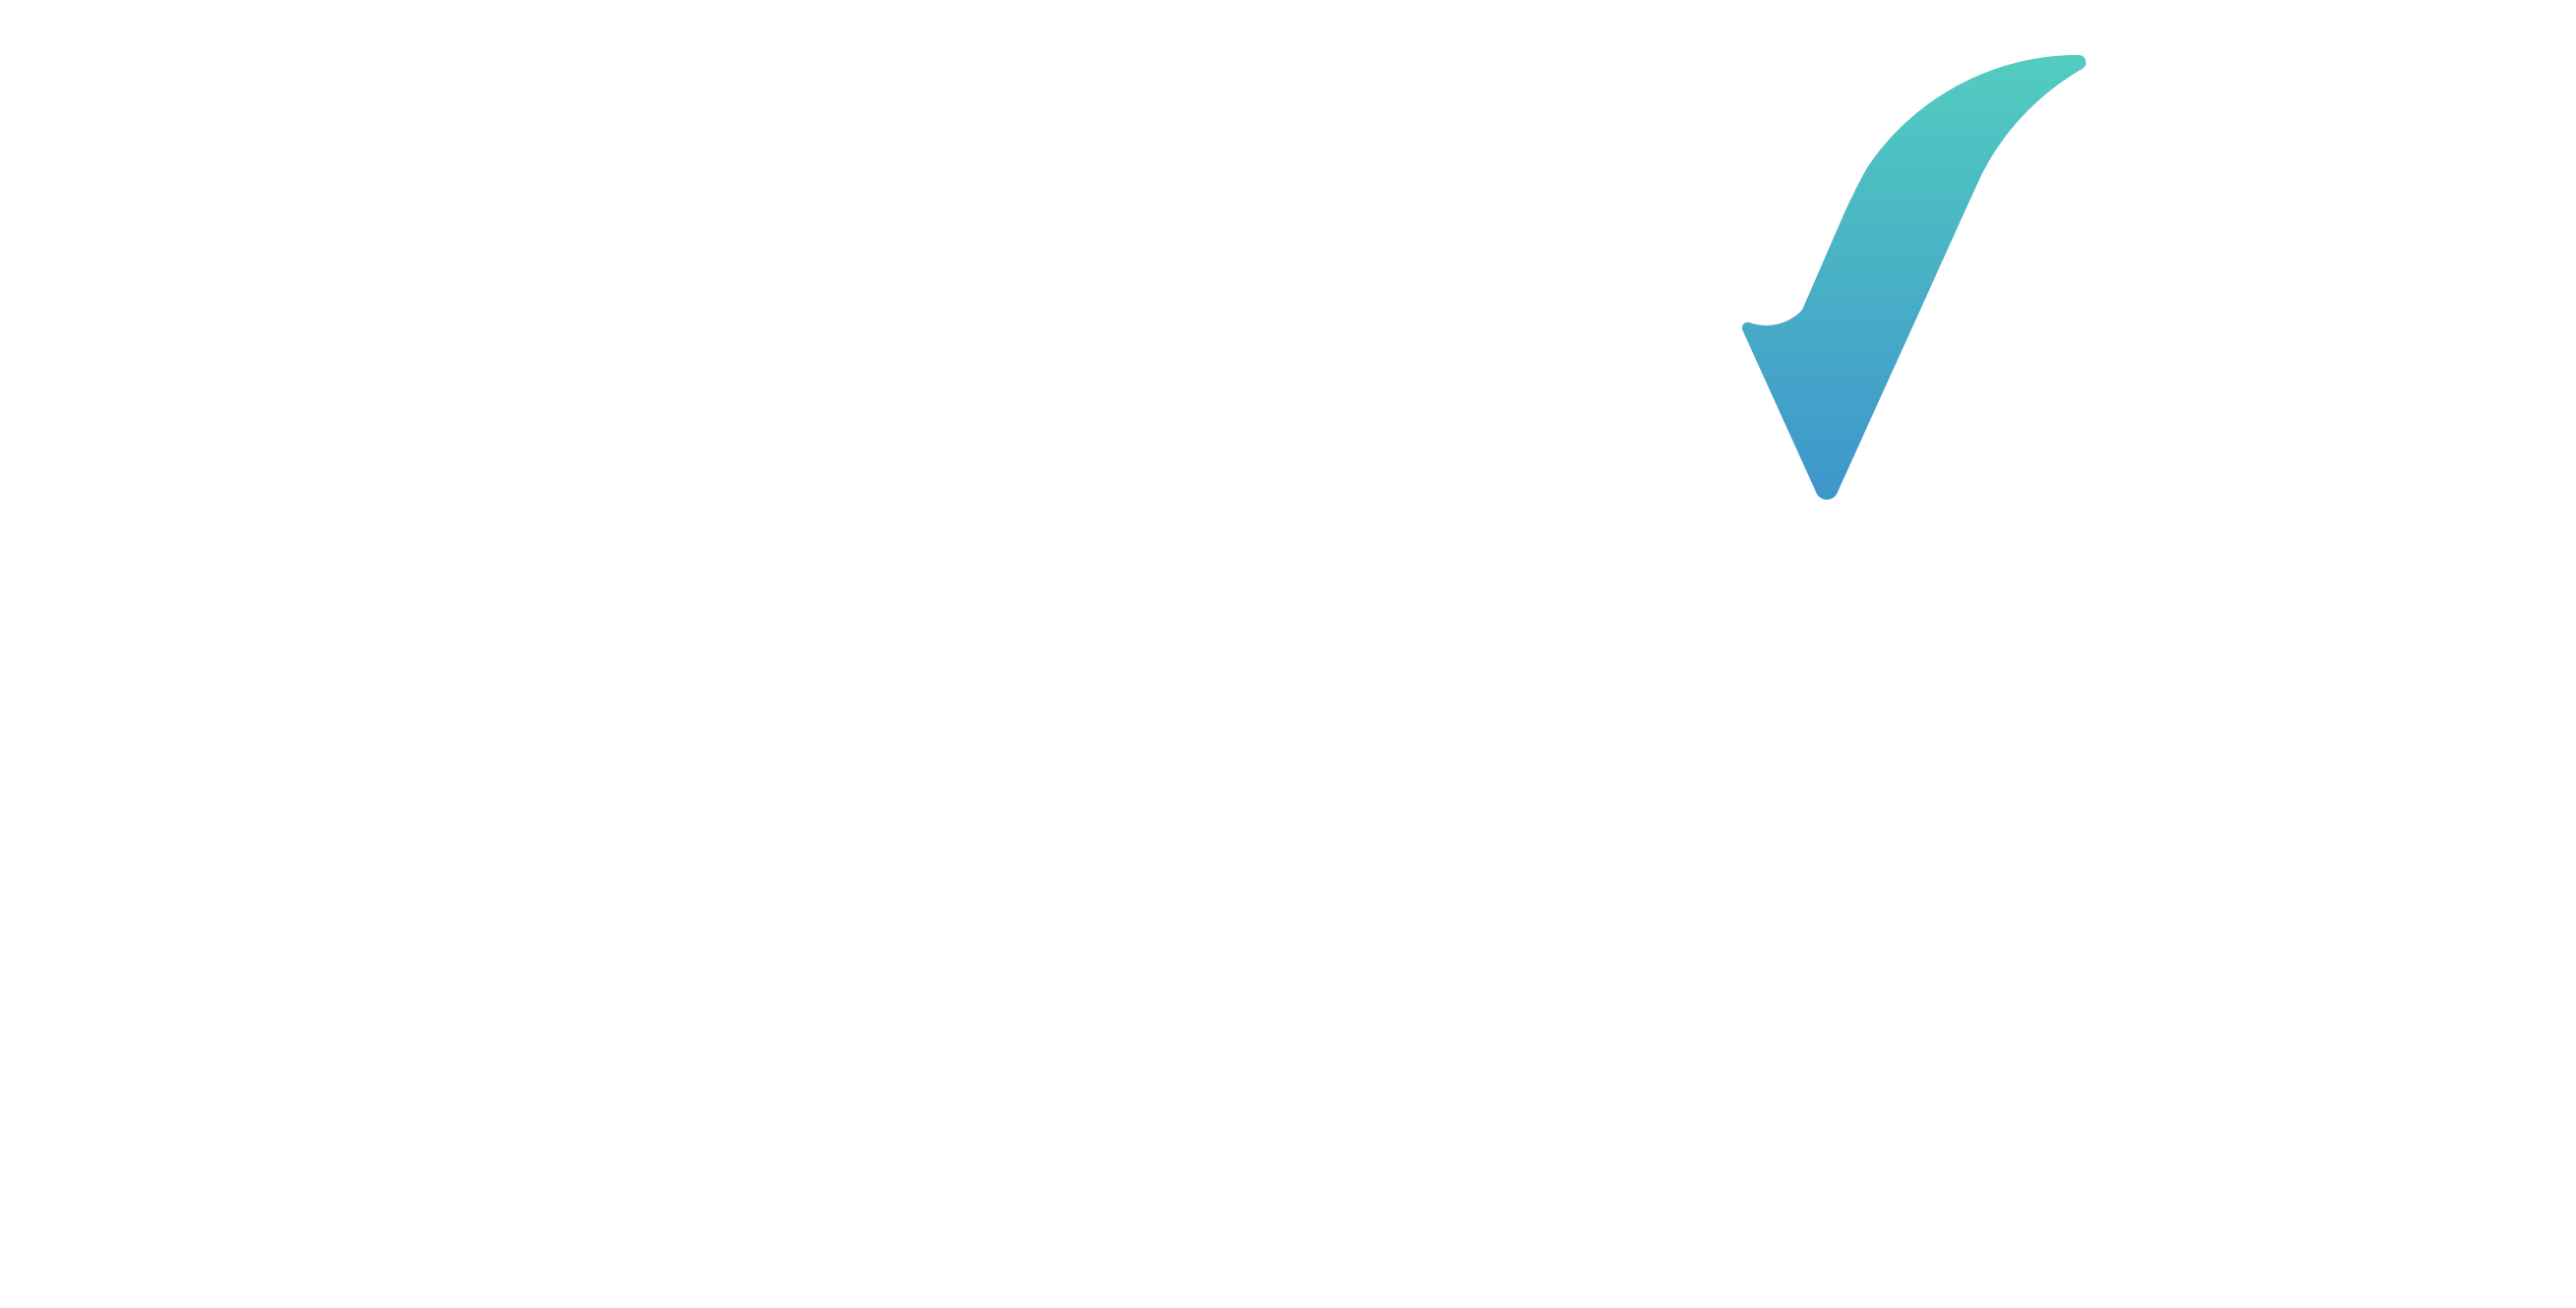 Logo Move